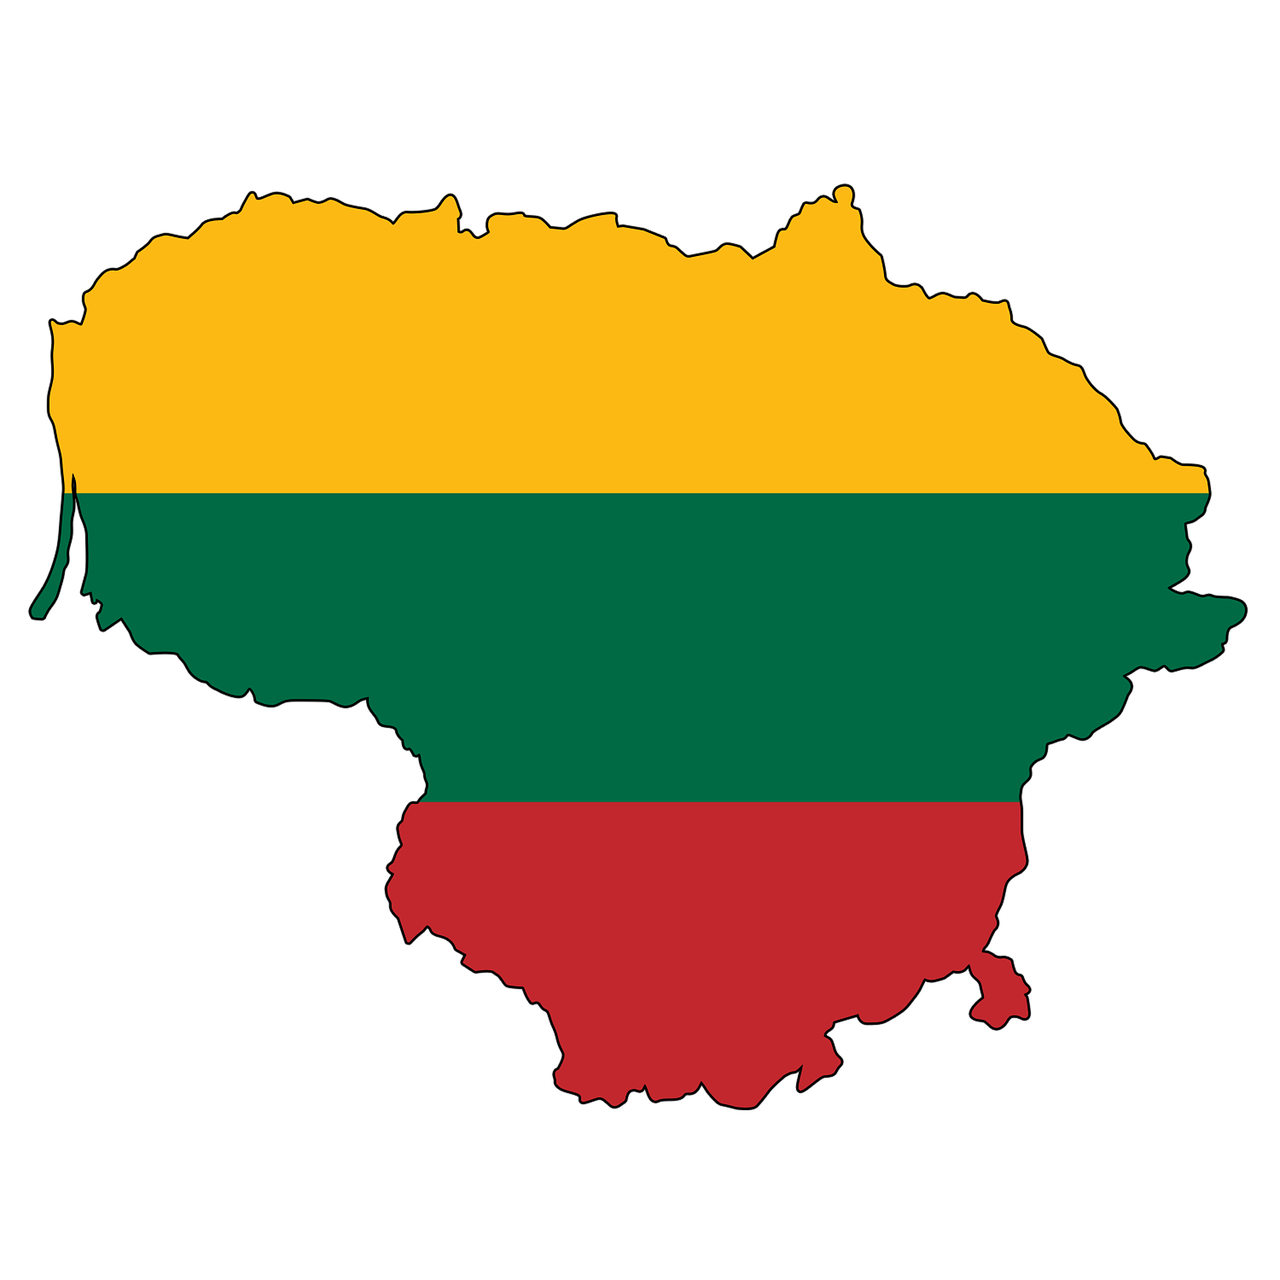 ¿Dónde está el país Lituania?